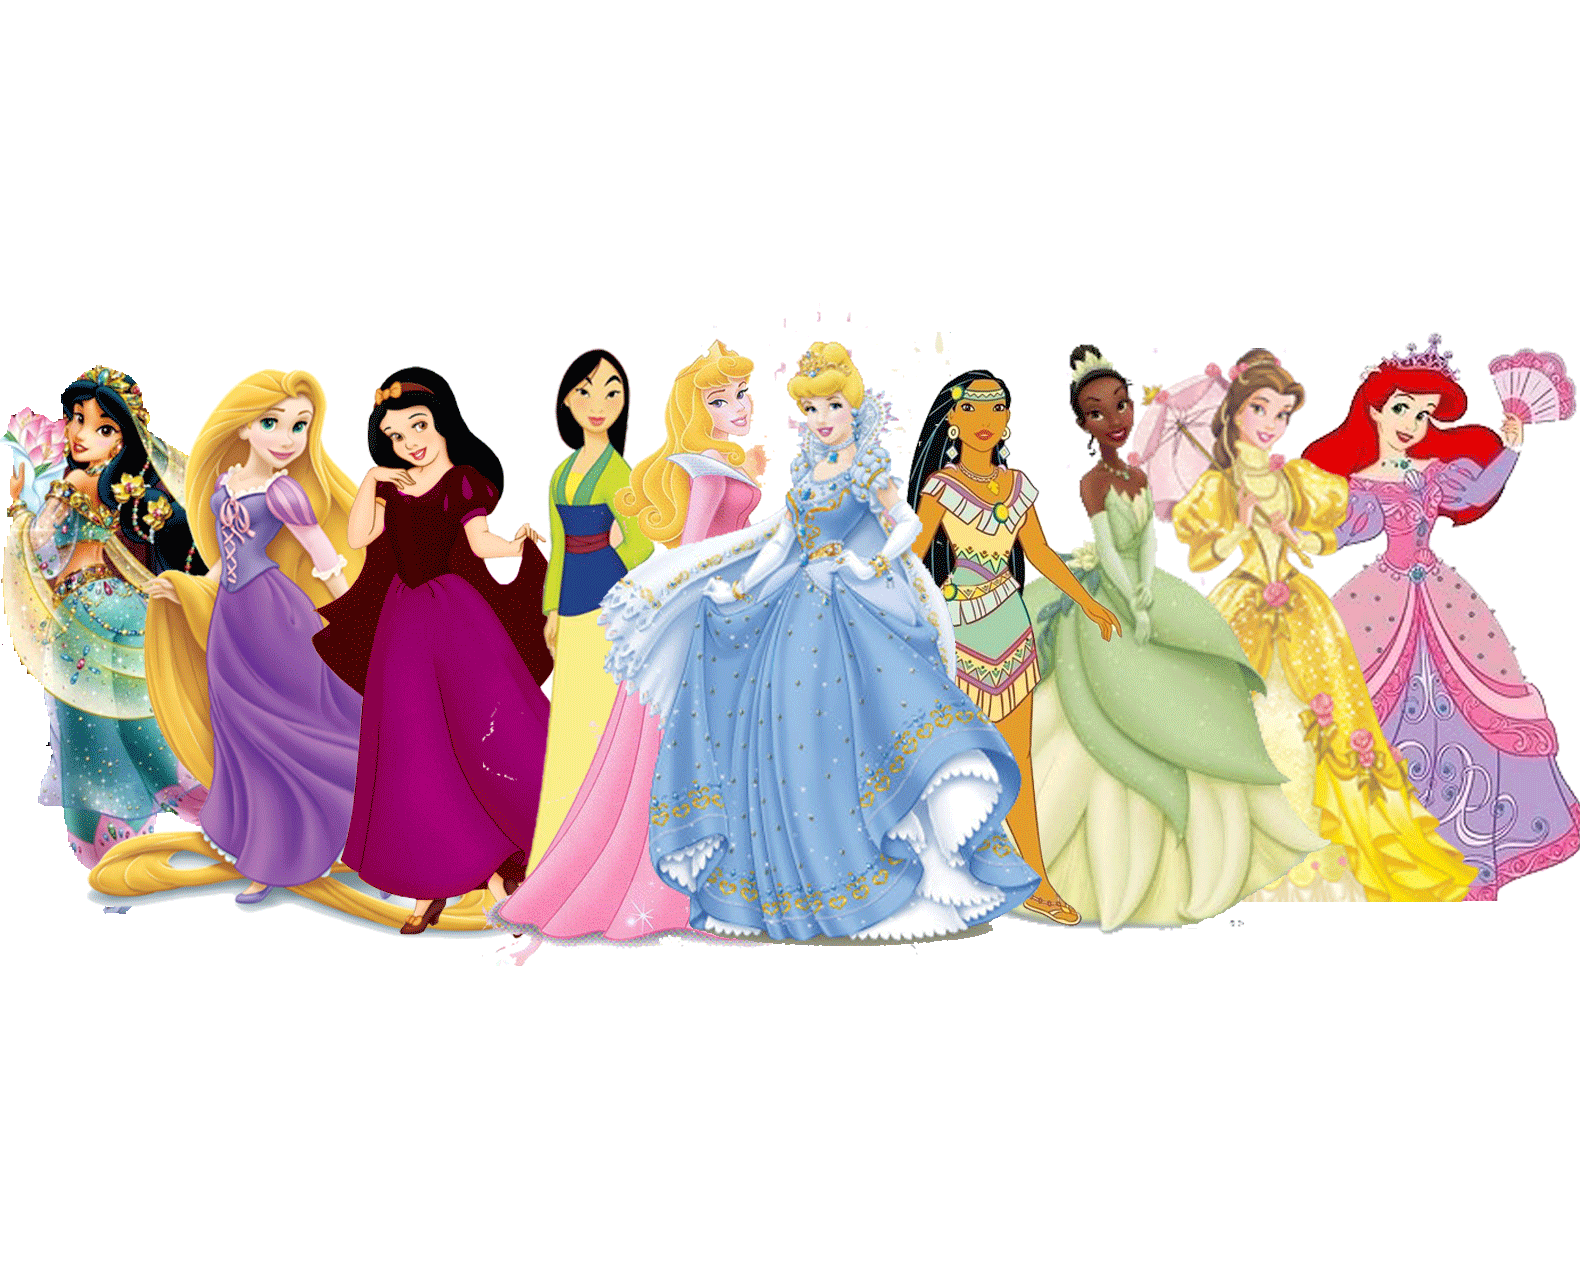 Disney Princess desktop picture, Disney Princess desktop wallpaper